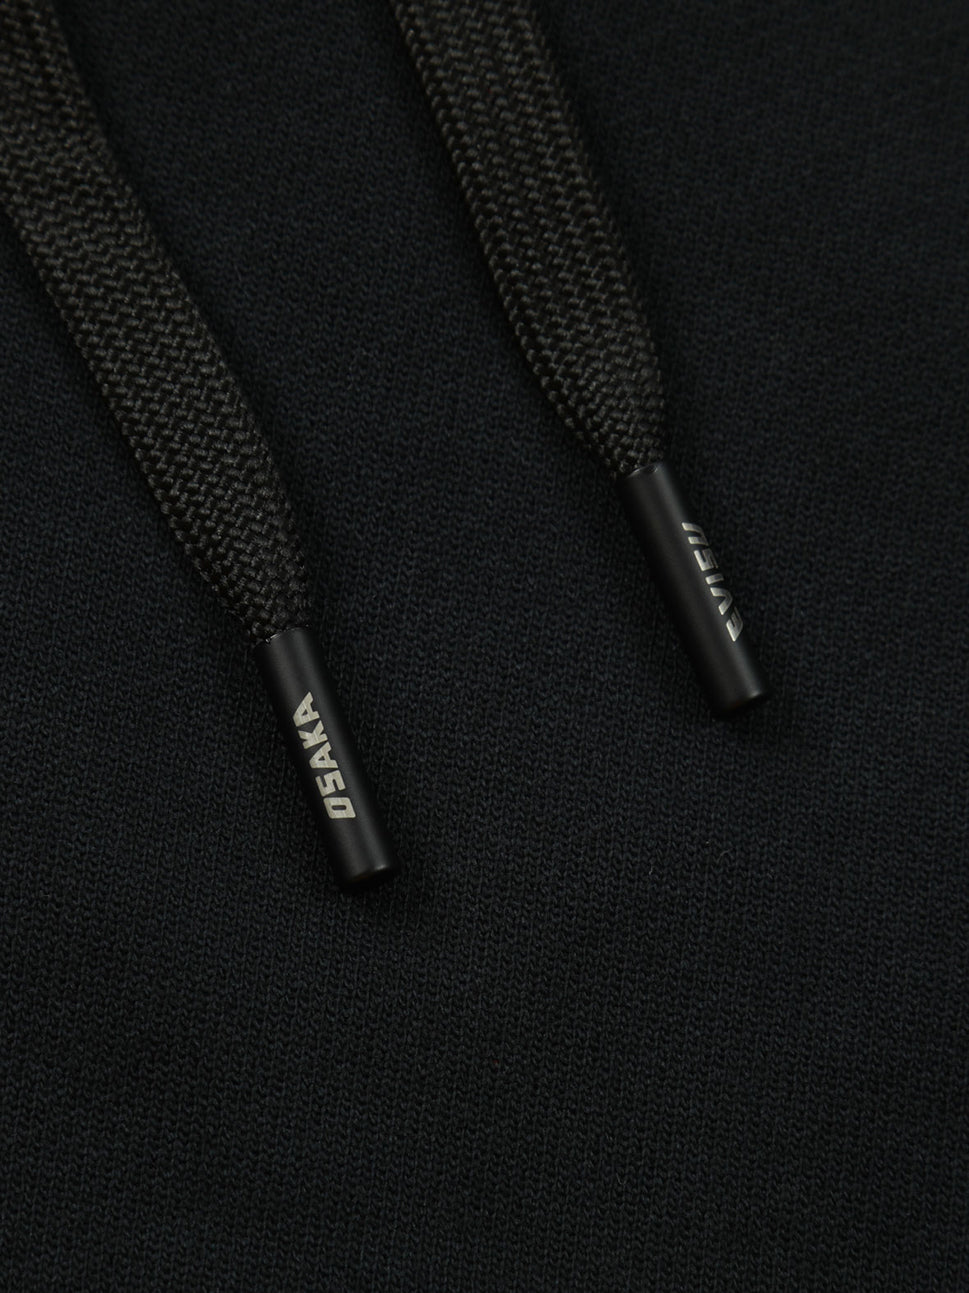 Evisu Black Seawave w/ Koi M Embroidery & Printed Sweat Shorts